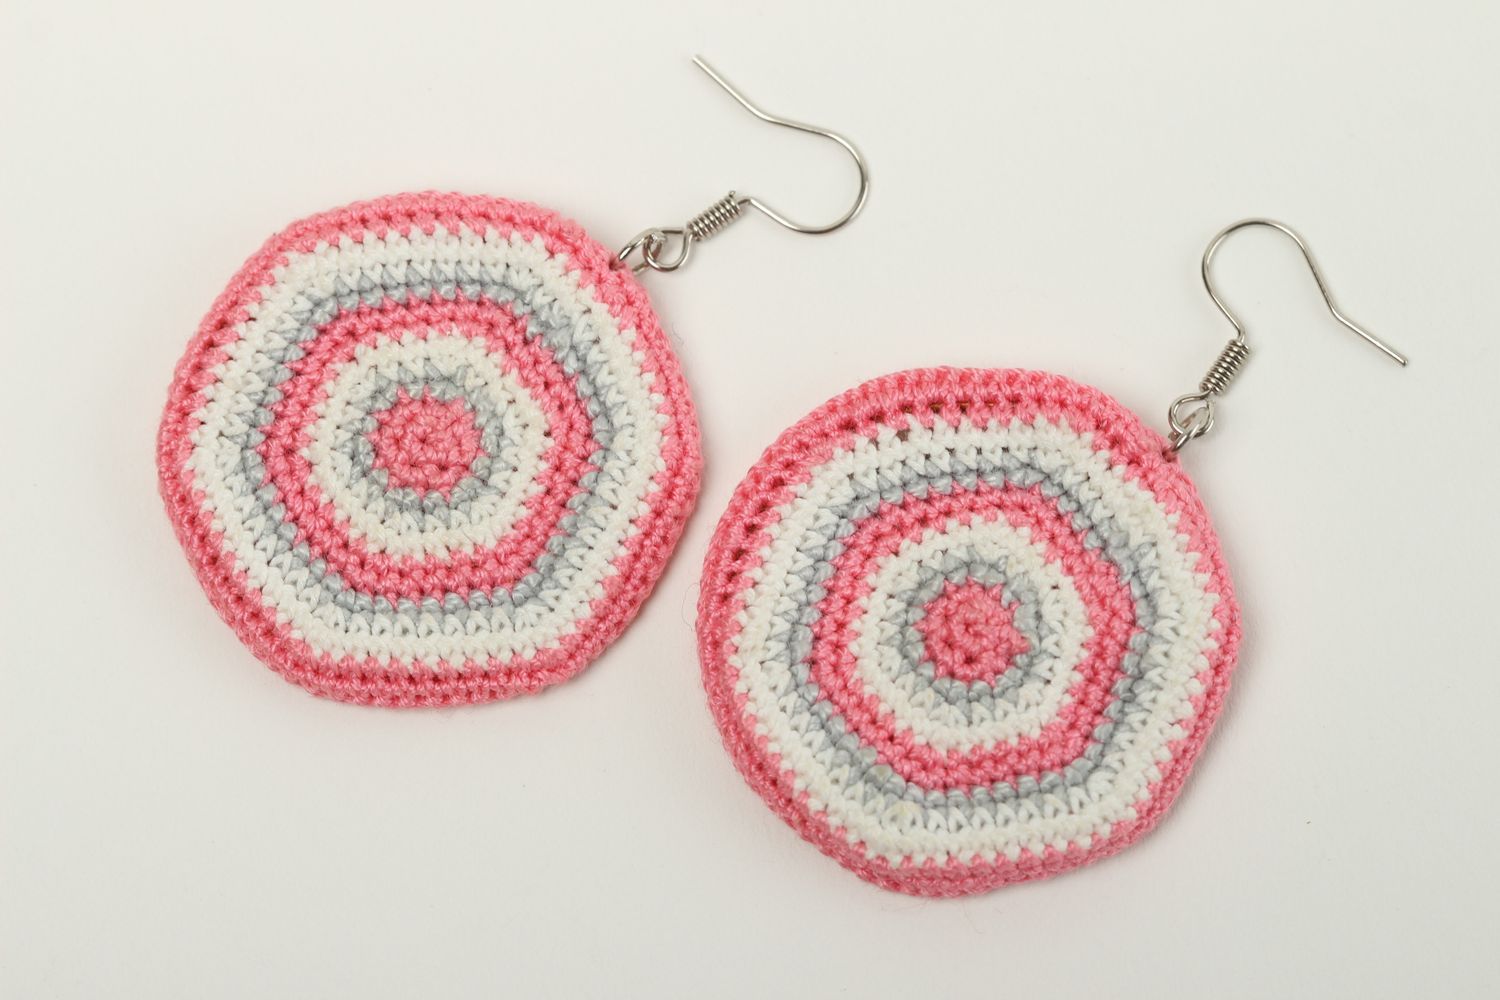 Handmade earrings unusual accessory gift ideas crocheted earrings gift for her photo 2